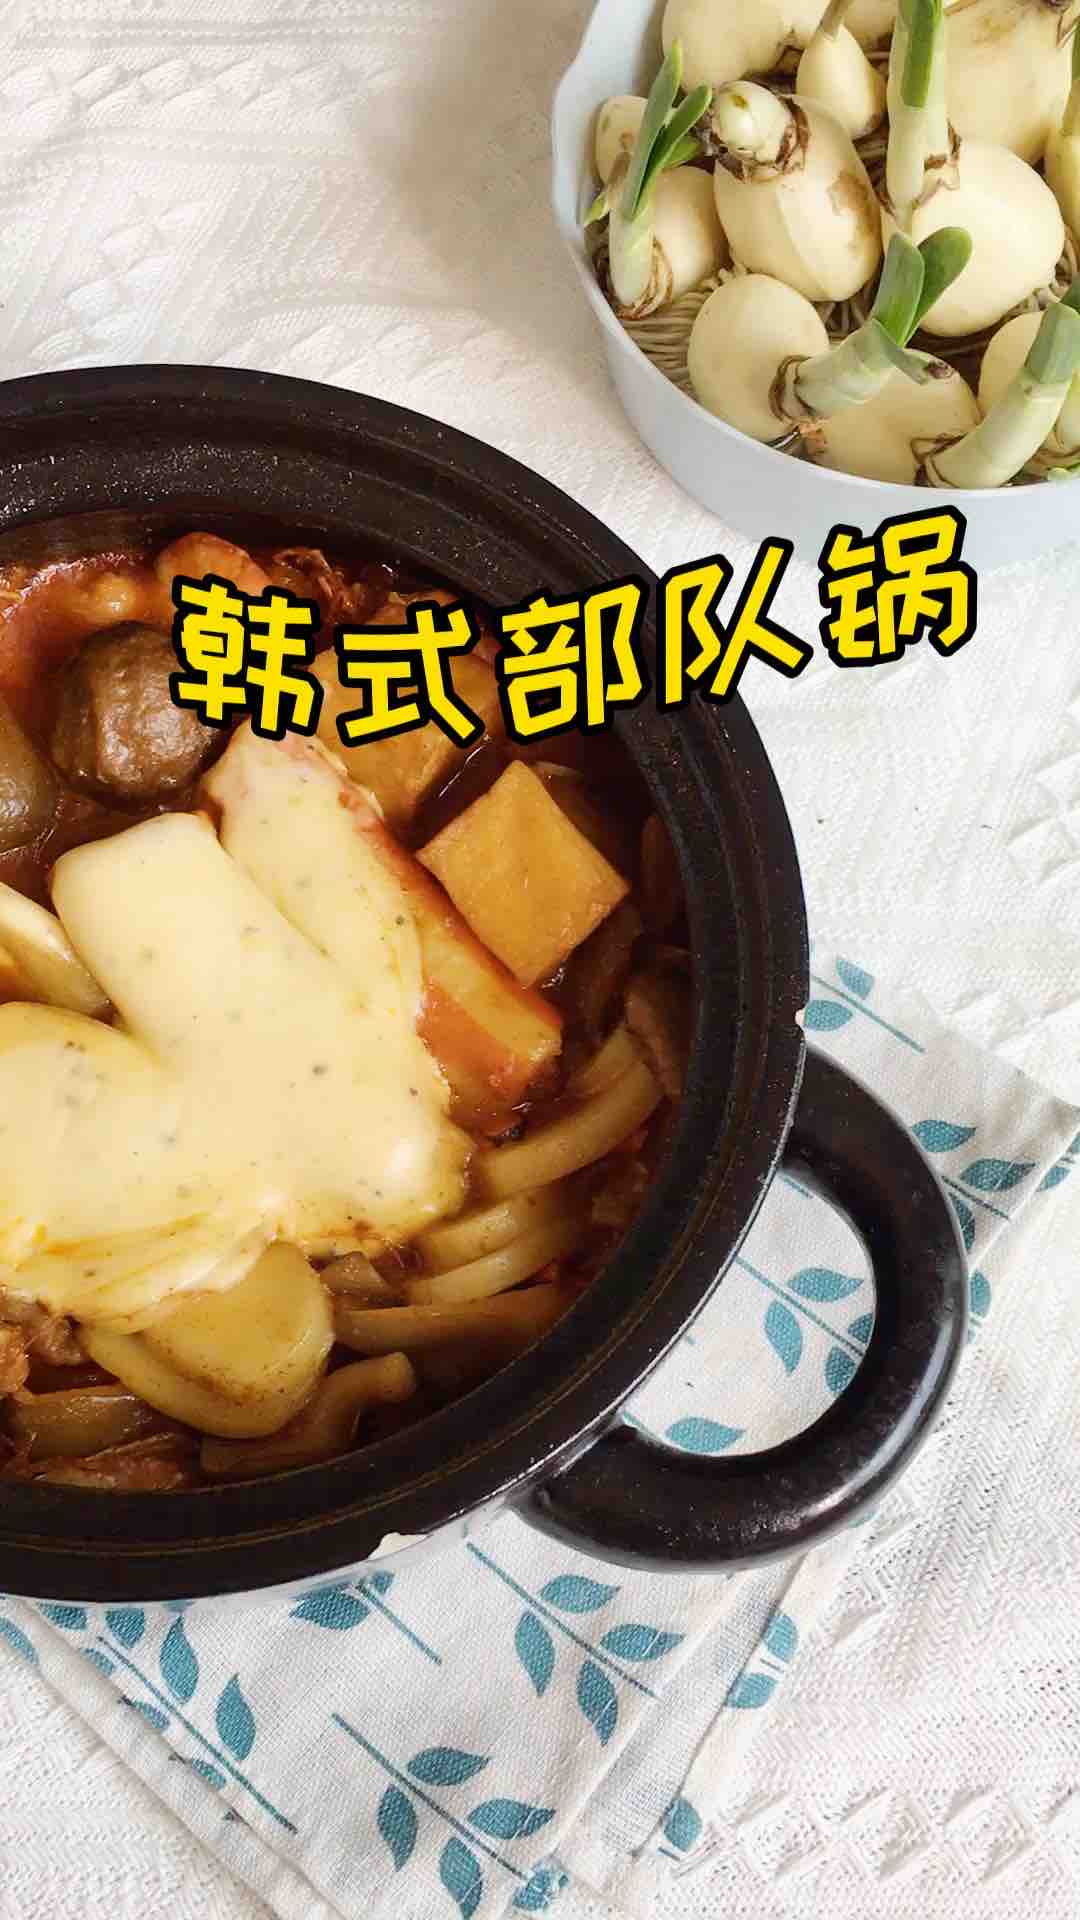 Korean Army Pot recipe